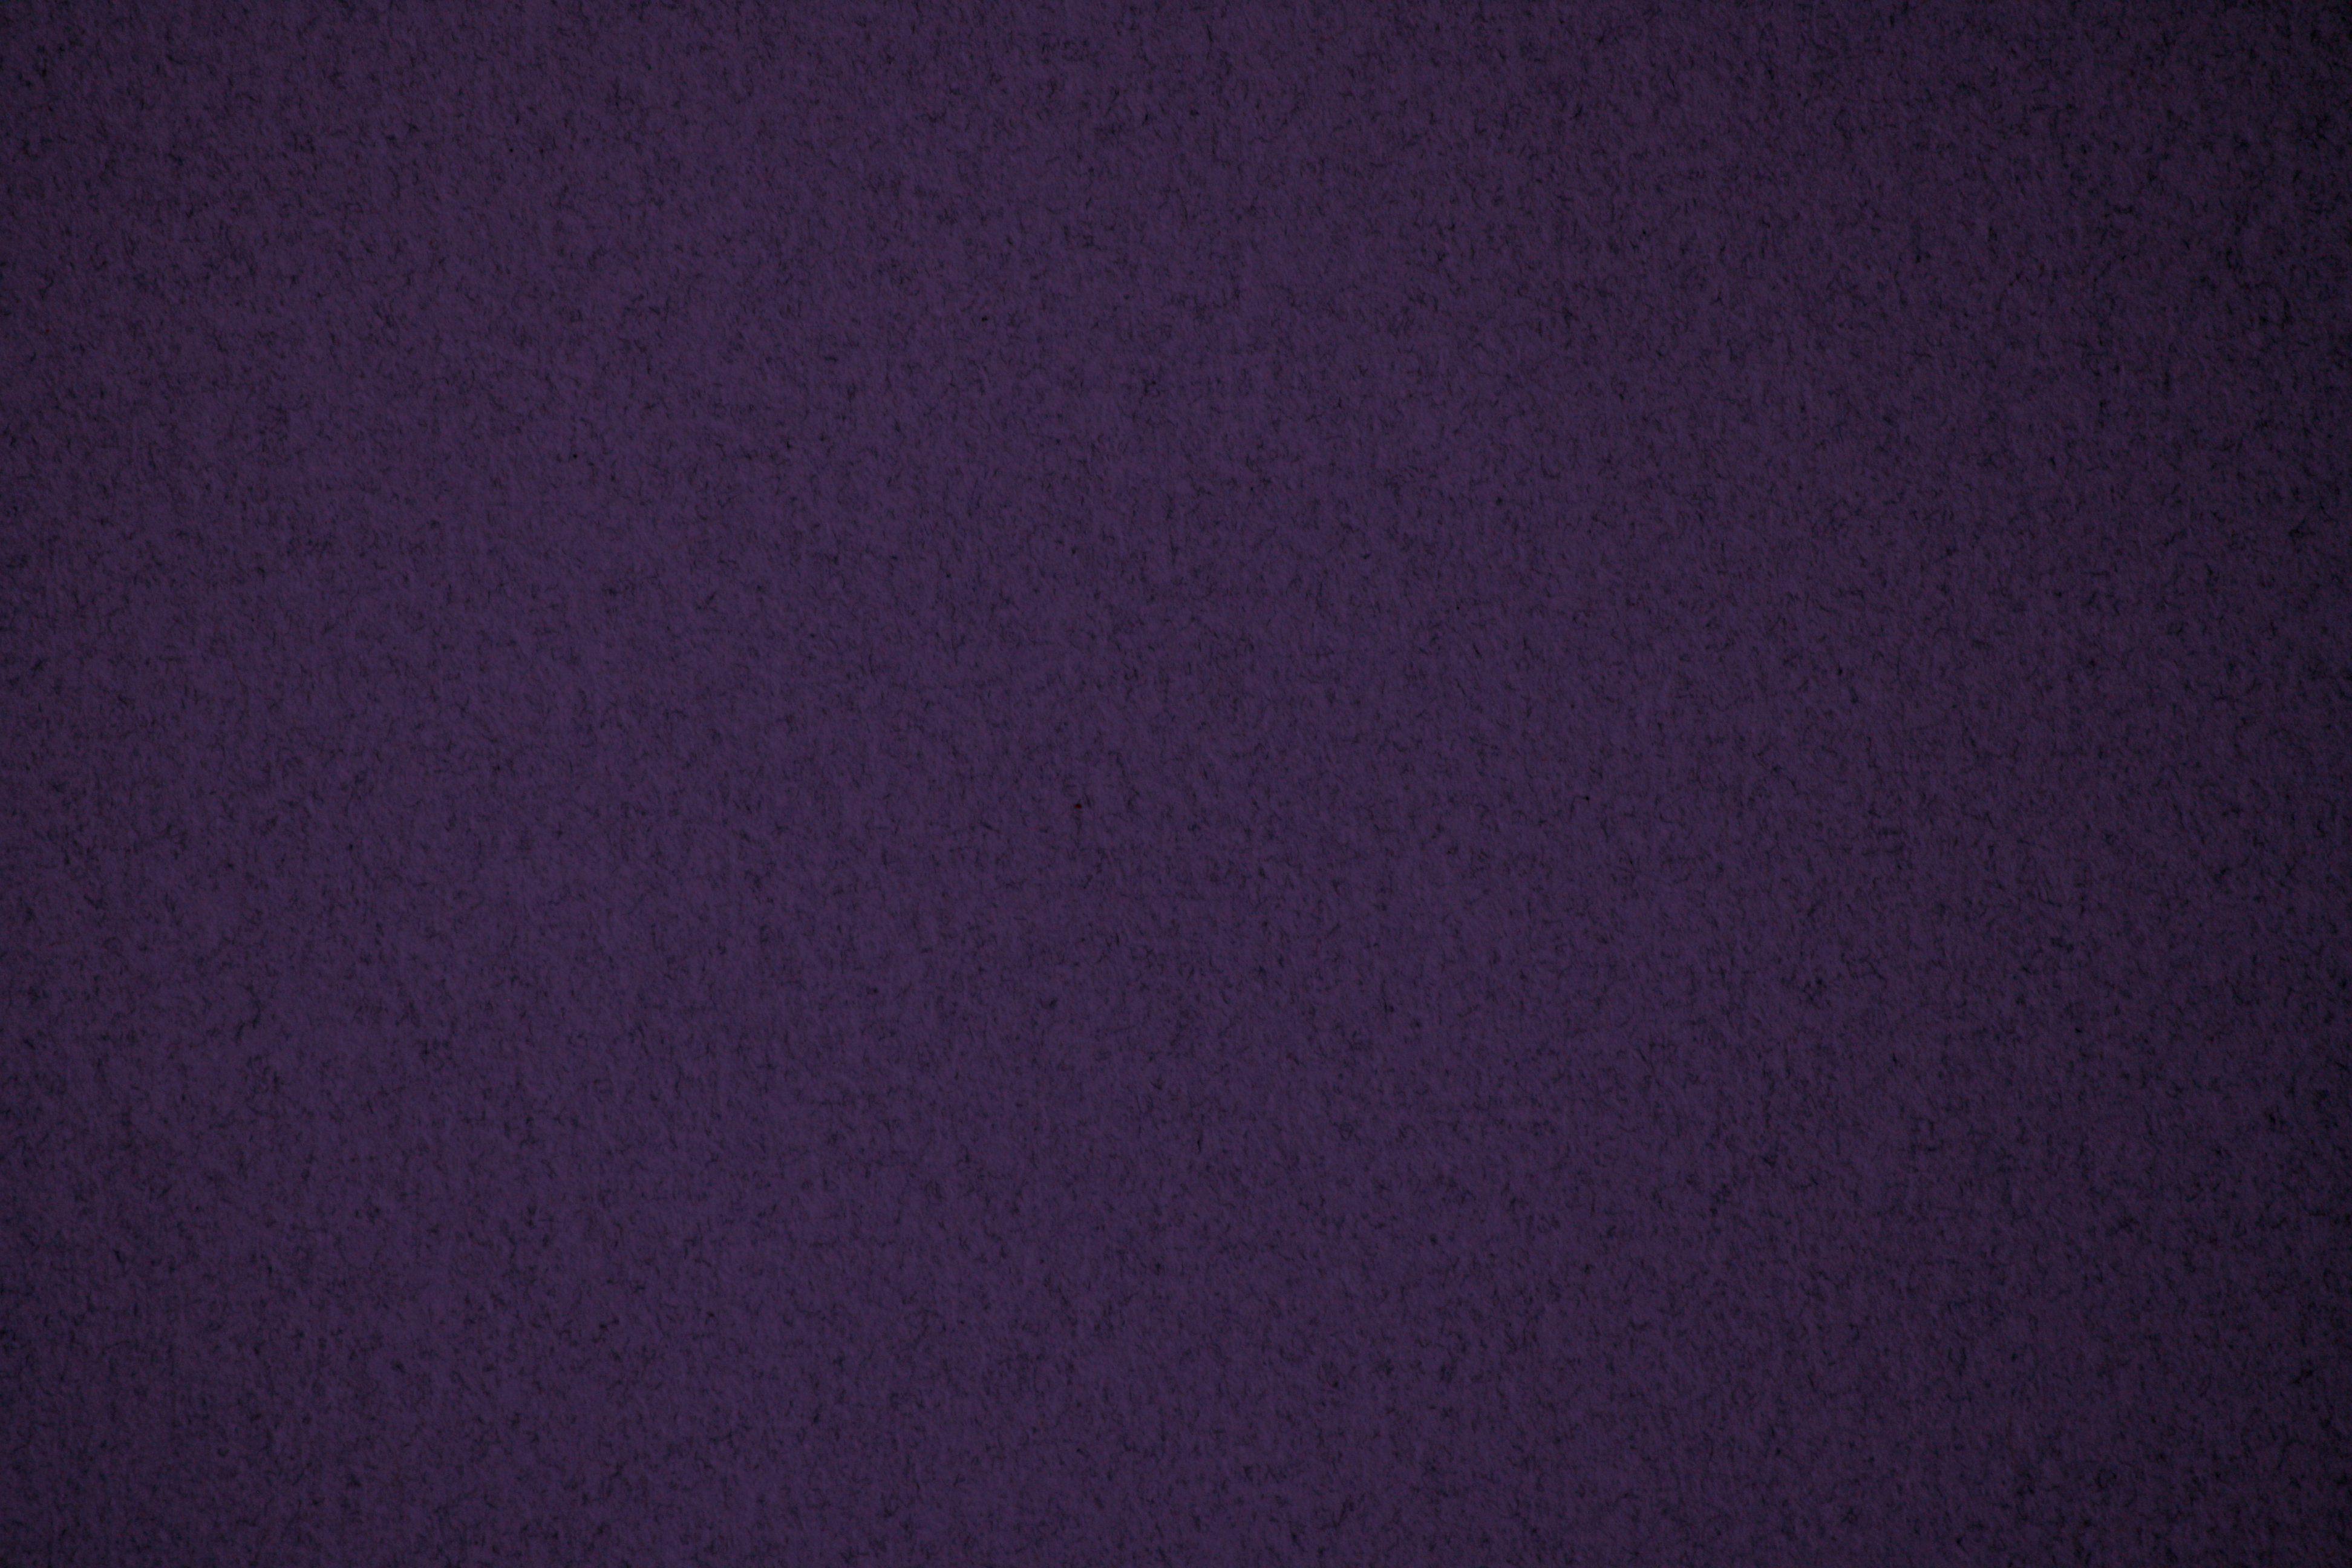 plain purple background